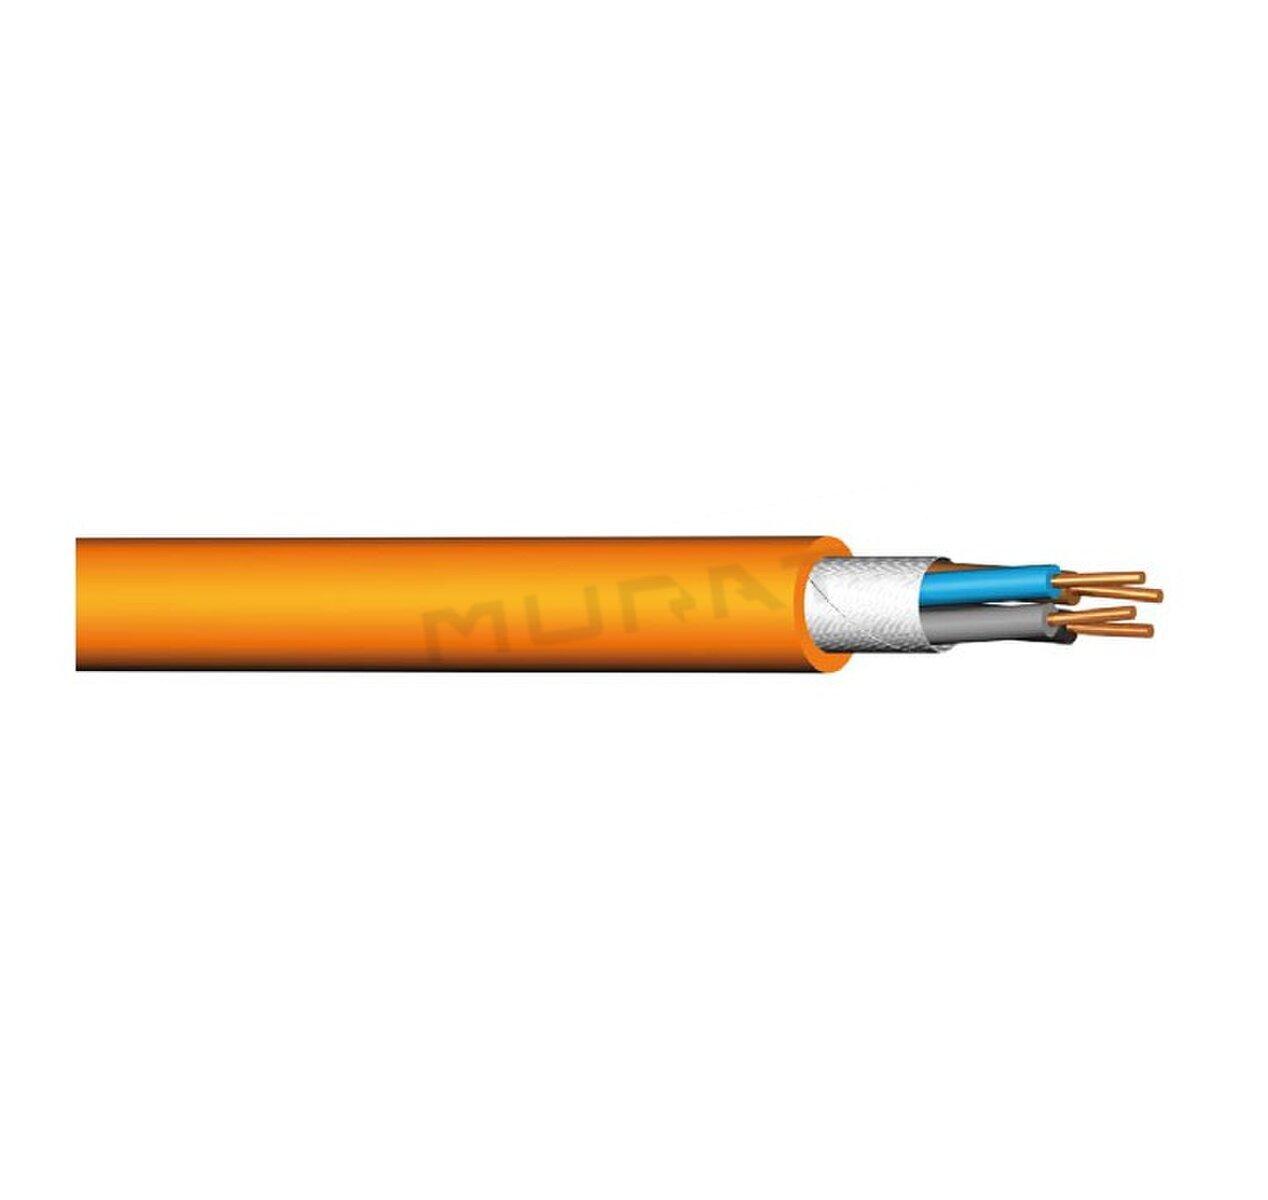 Kábel NHXH-J 5x2,5 mm2 FE180/E30 N silový